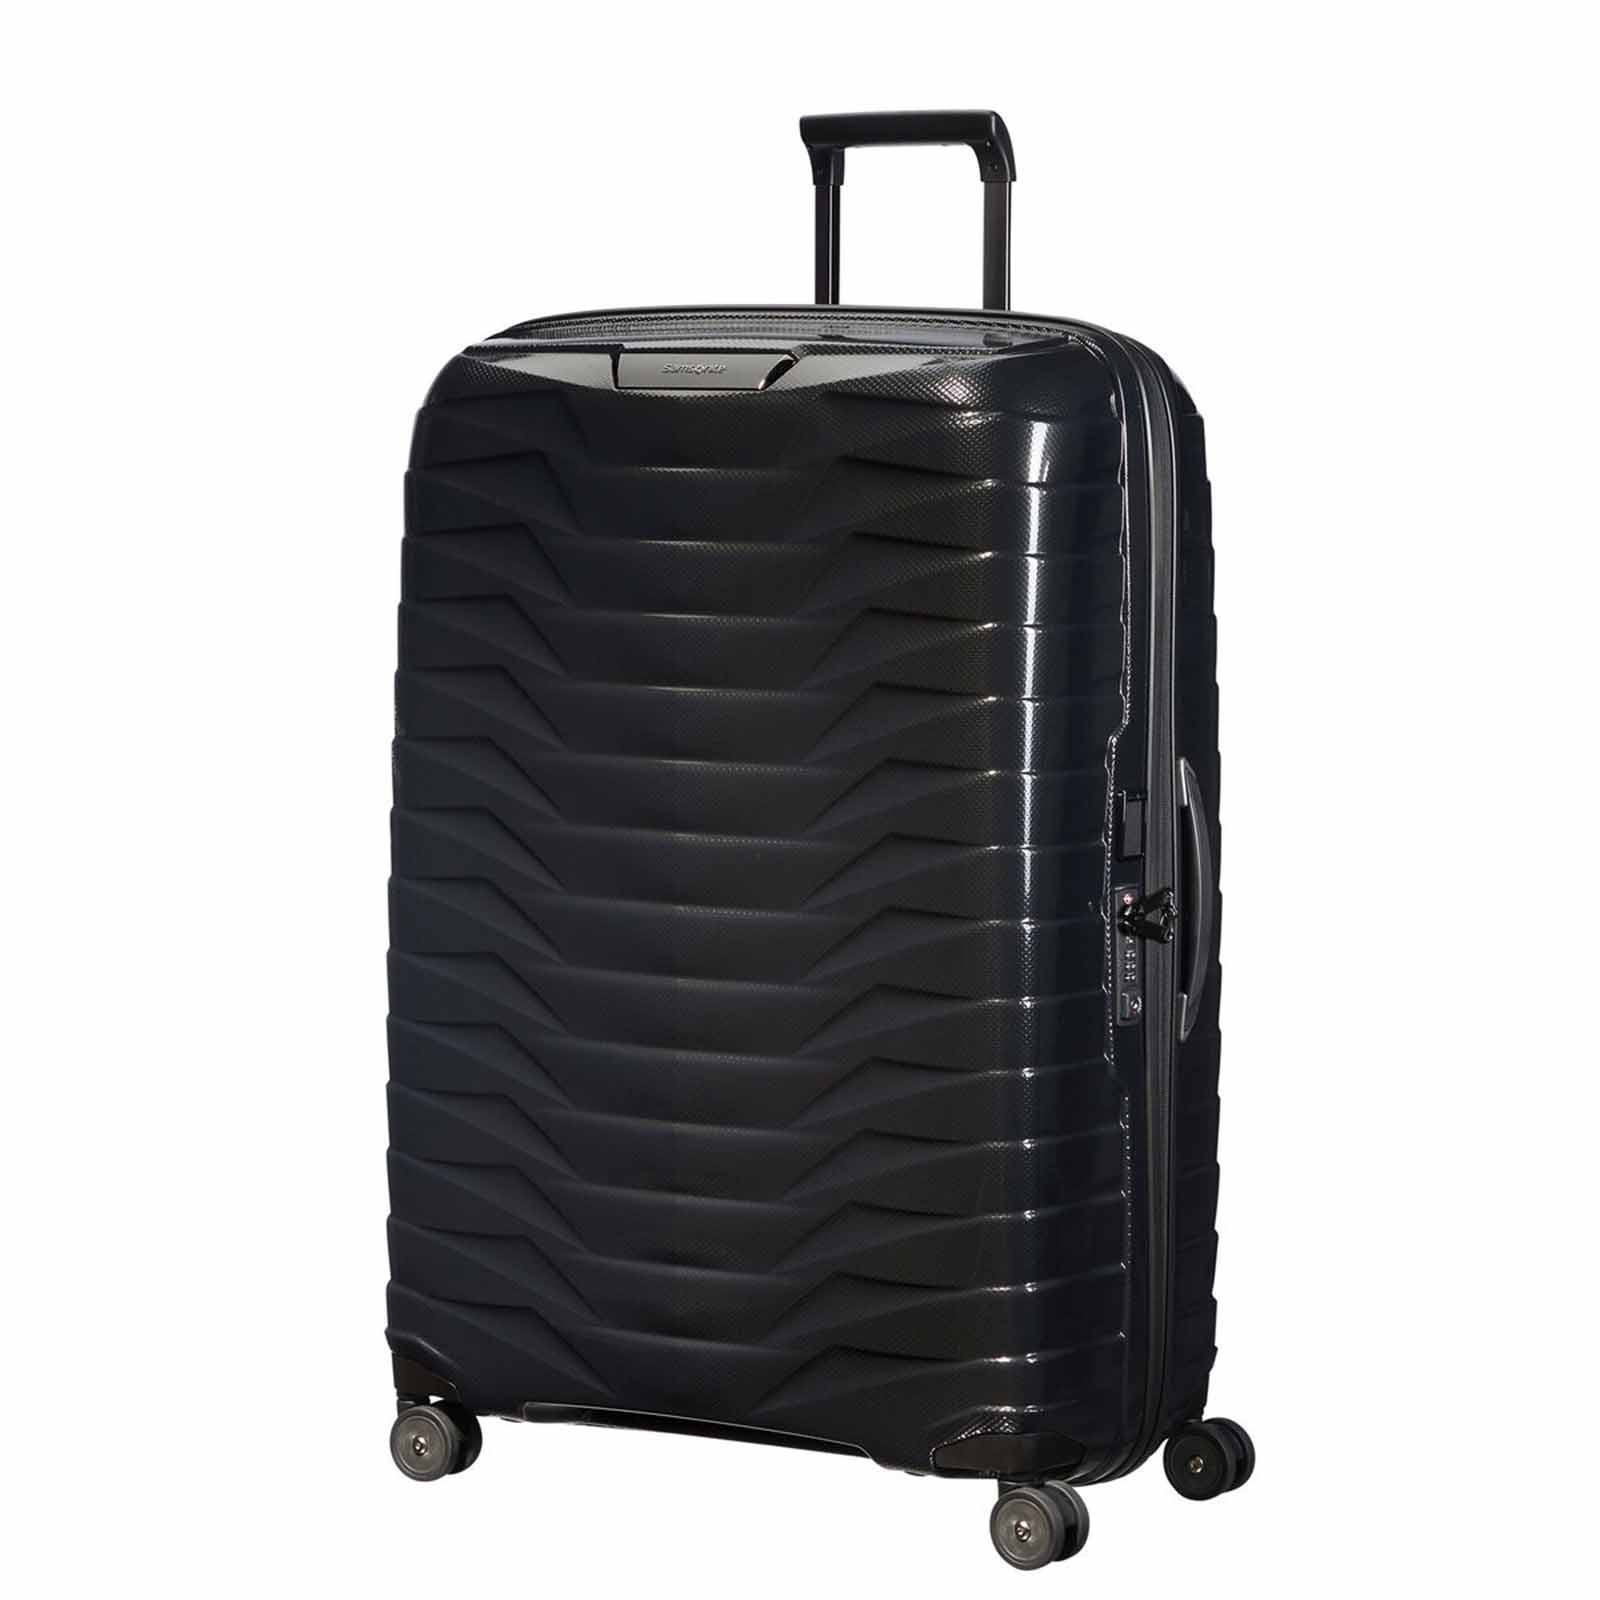 Samsonite-Proxis-81cm-Suitcase-Black-Front-Angle